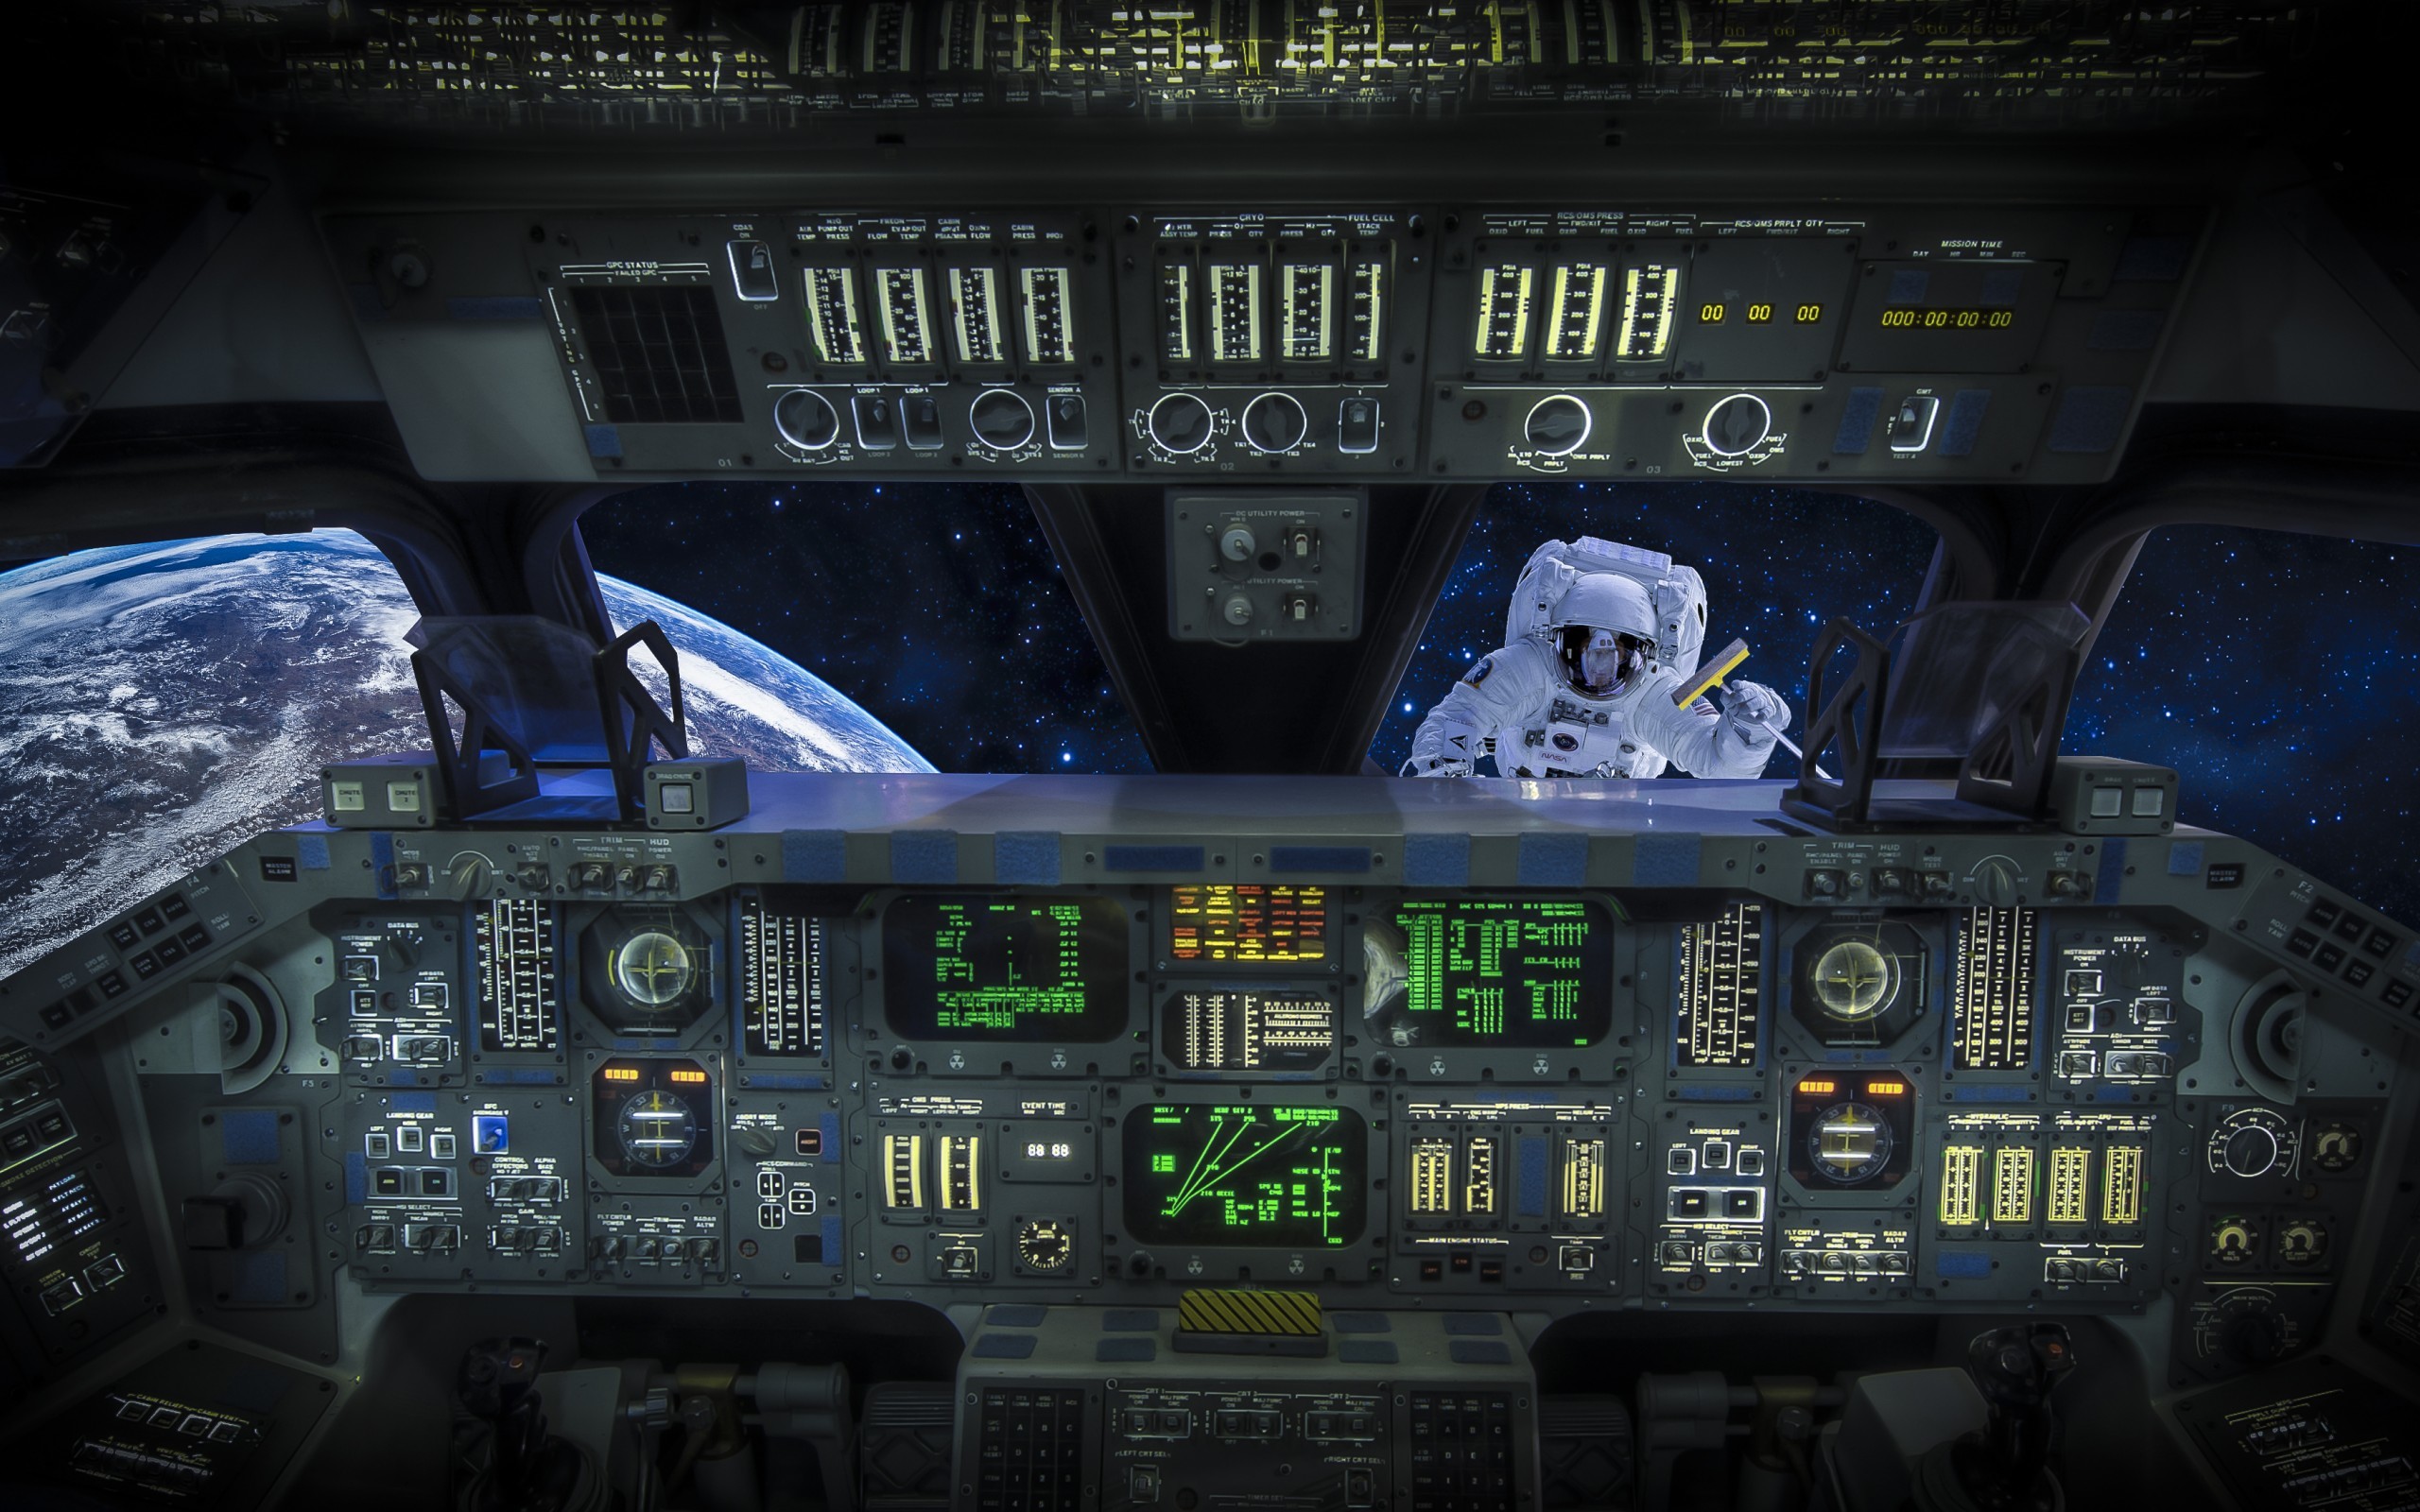 millenium falcon cockpit wallpaper